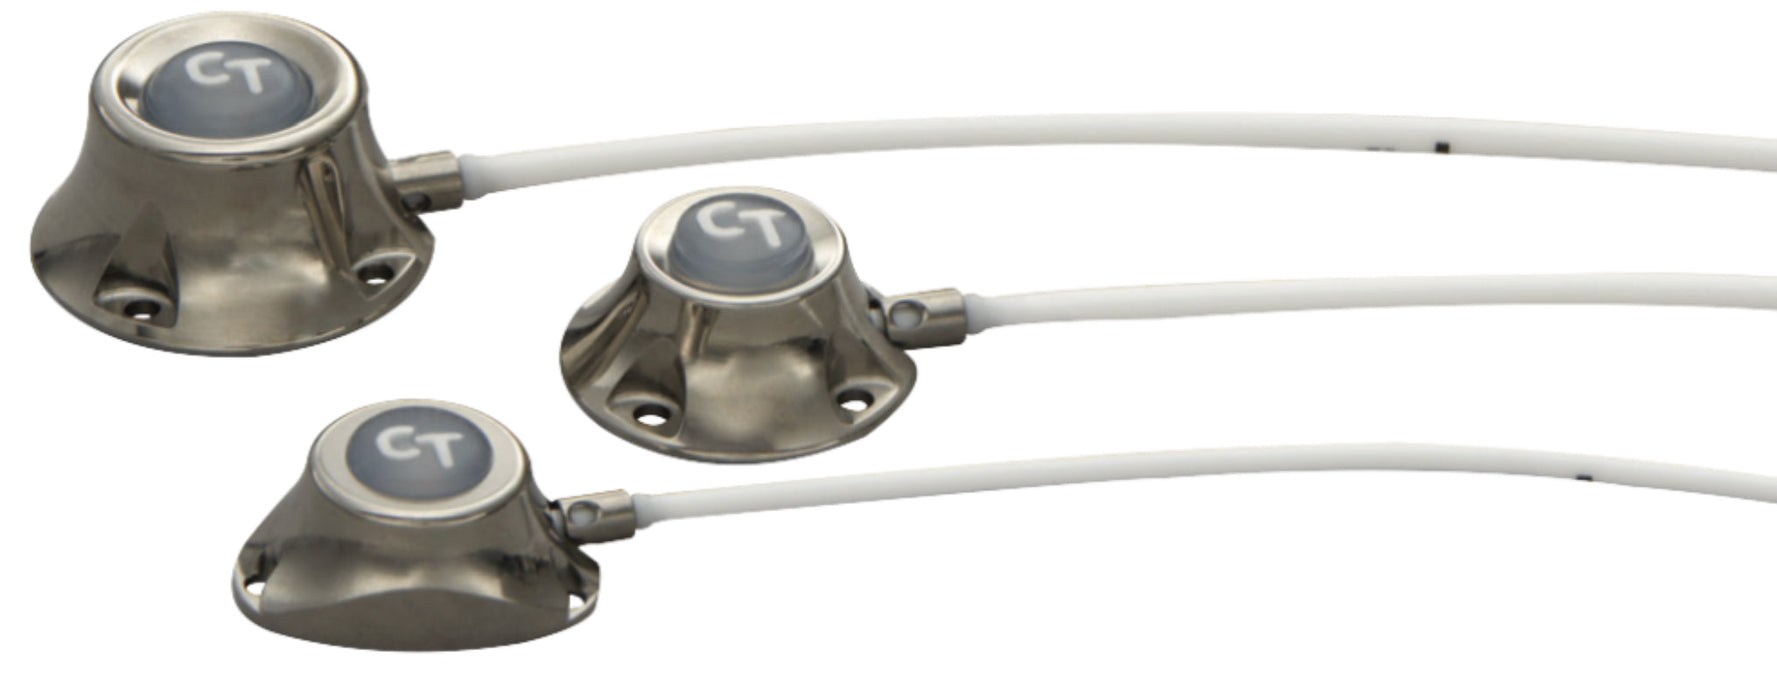 Port-A-Cath Power P.A.C Implantable Vascular Access System Tray w/ Titanium Contoured Single Lumen Portal, 8.5Fr, 1.6mm ID x 2.6mm OD Catheter